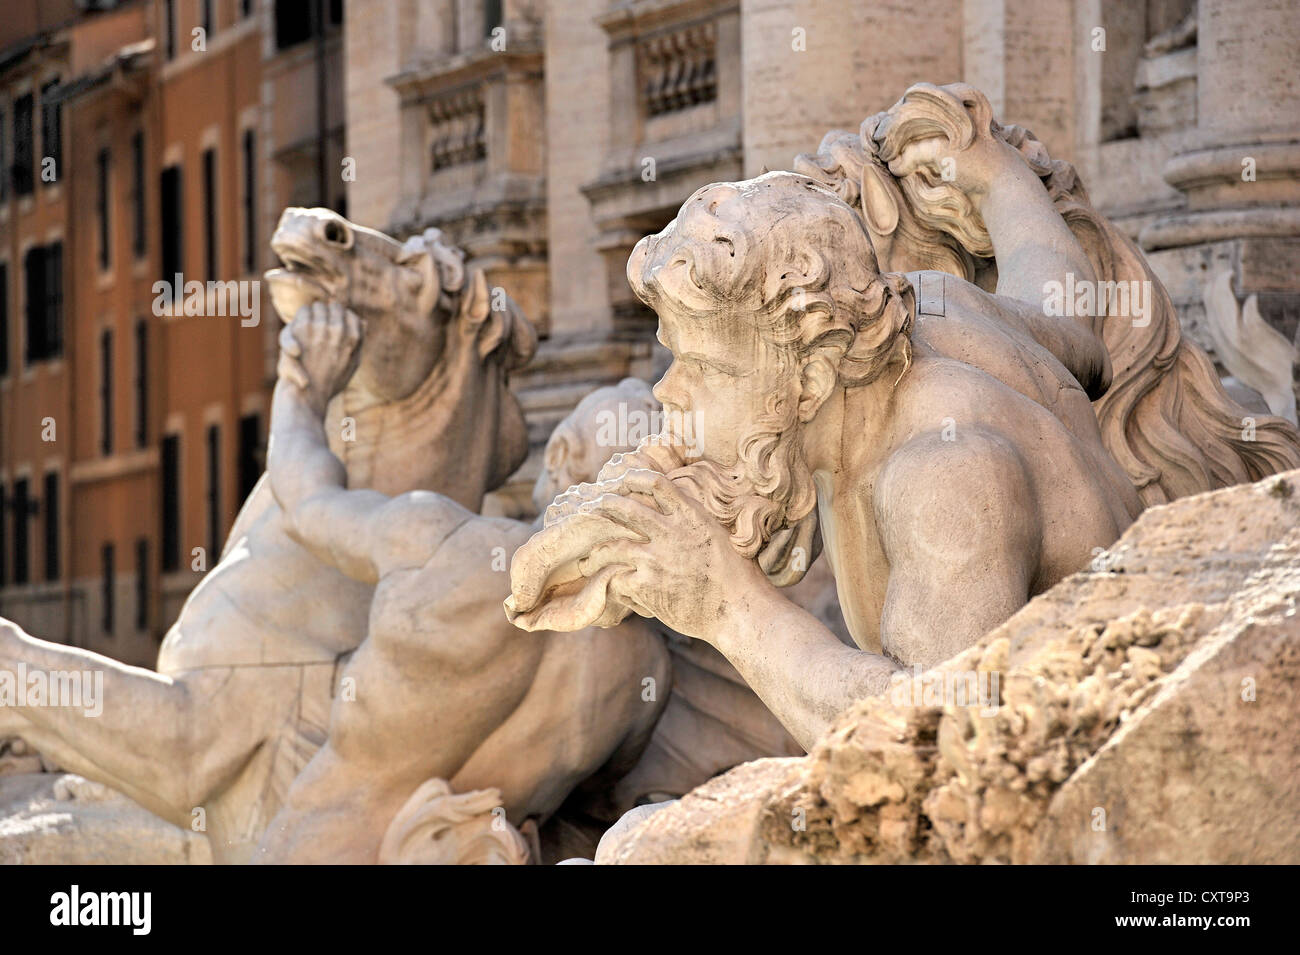 Triton con un caballo alado en la Fontana di Trevi, la Fuente de Trevi, Roma, región de Lazio, Italia, Europa Foto de stock